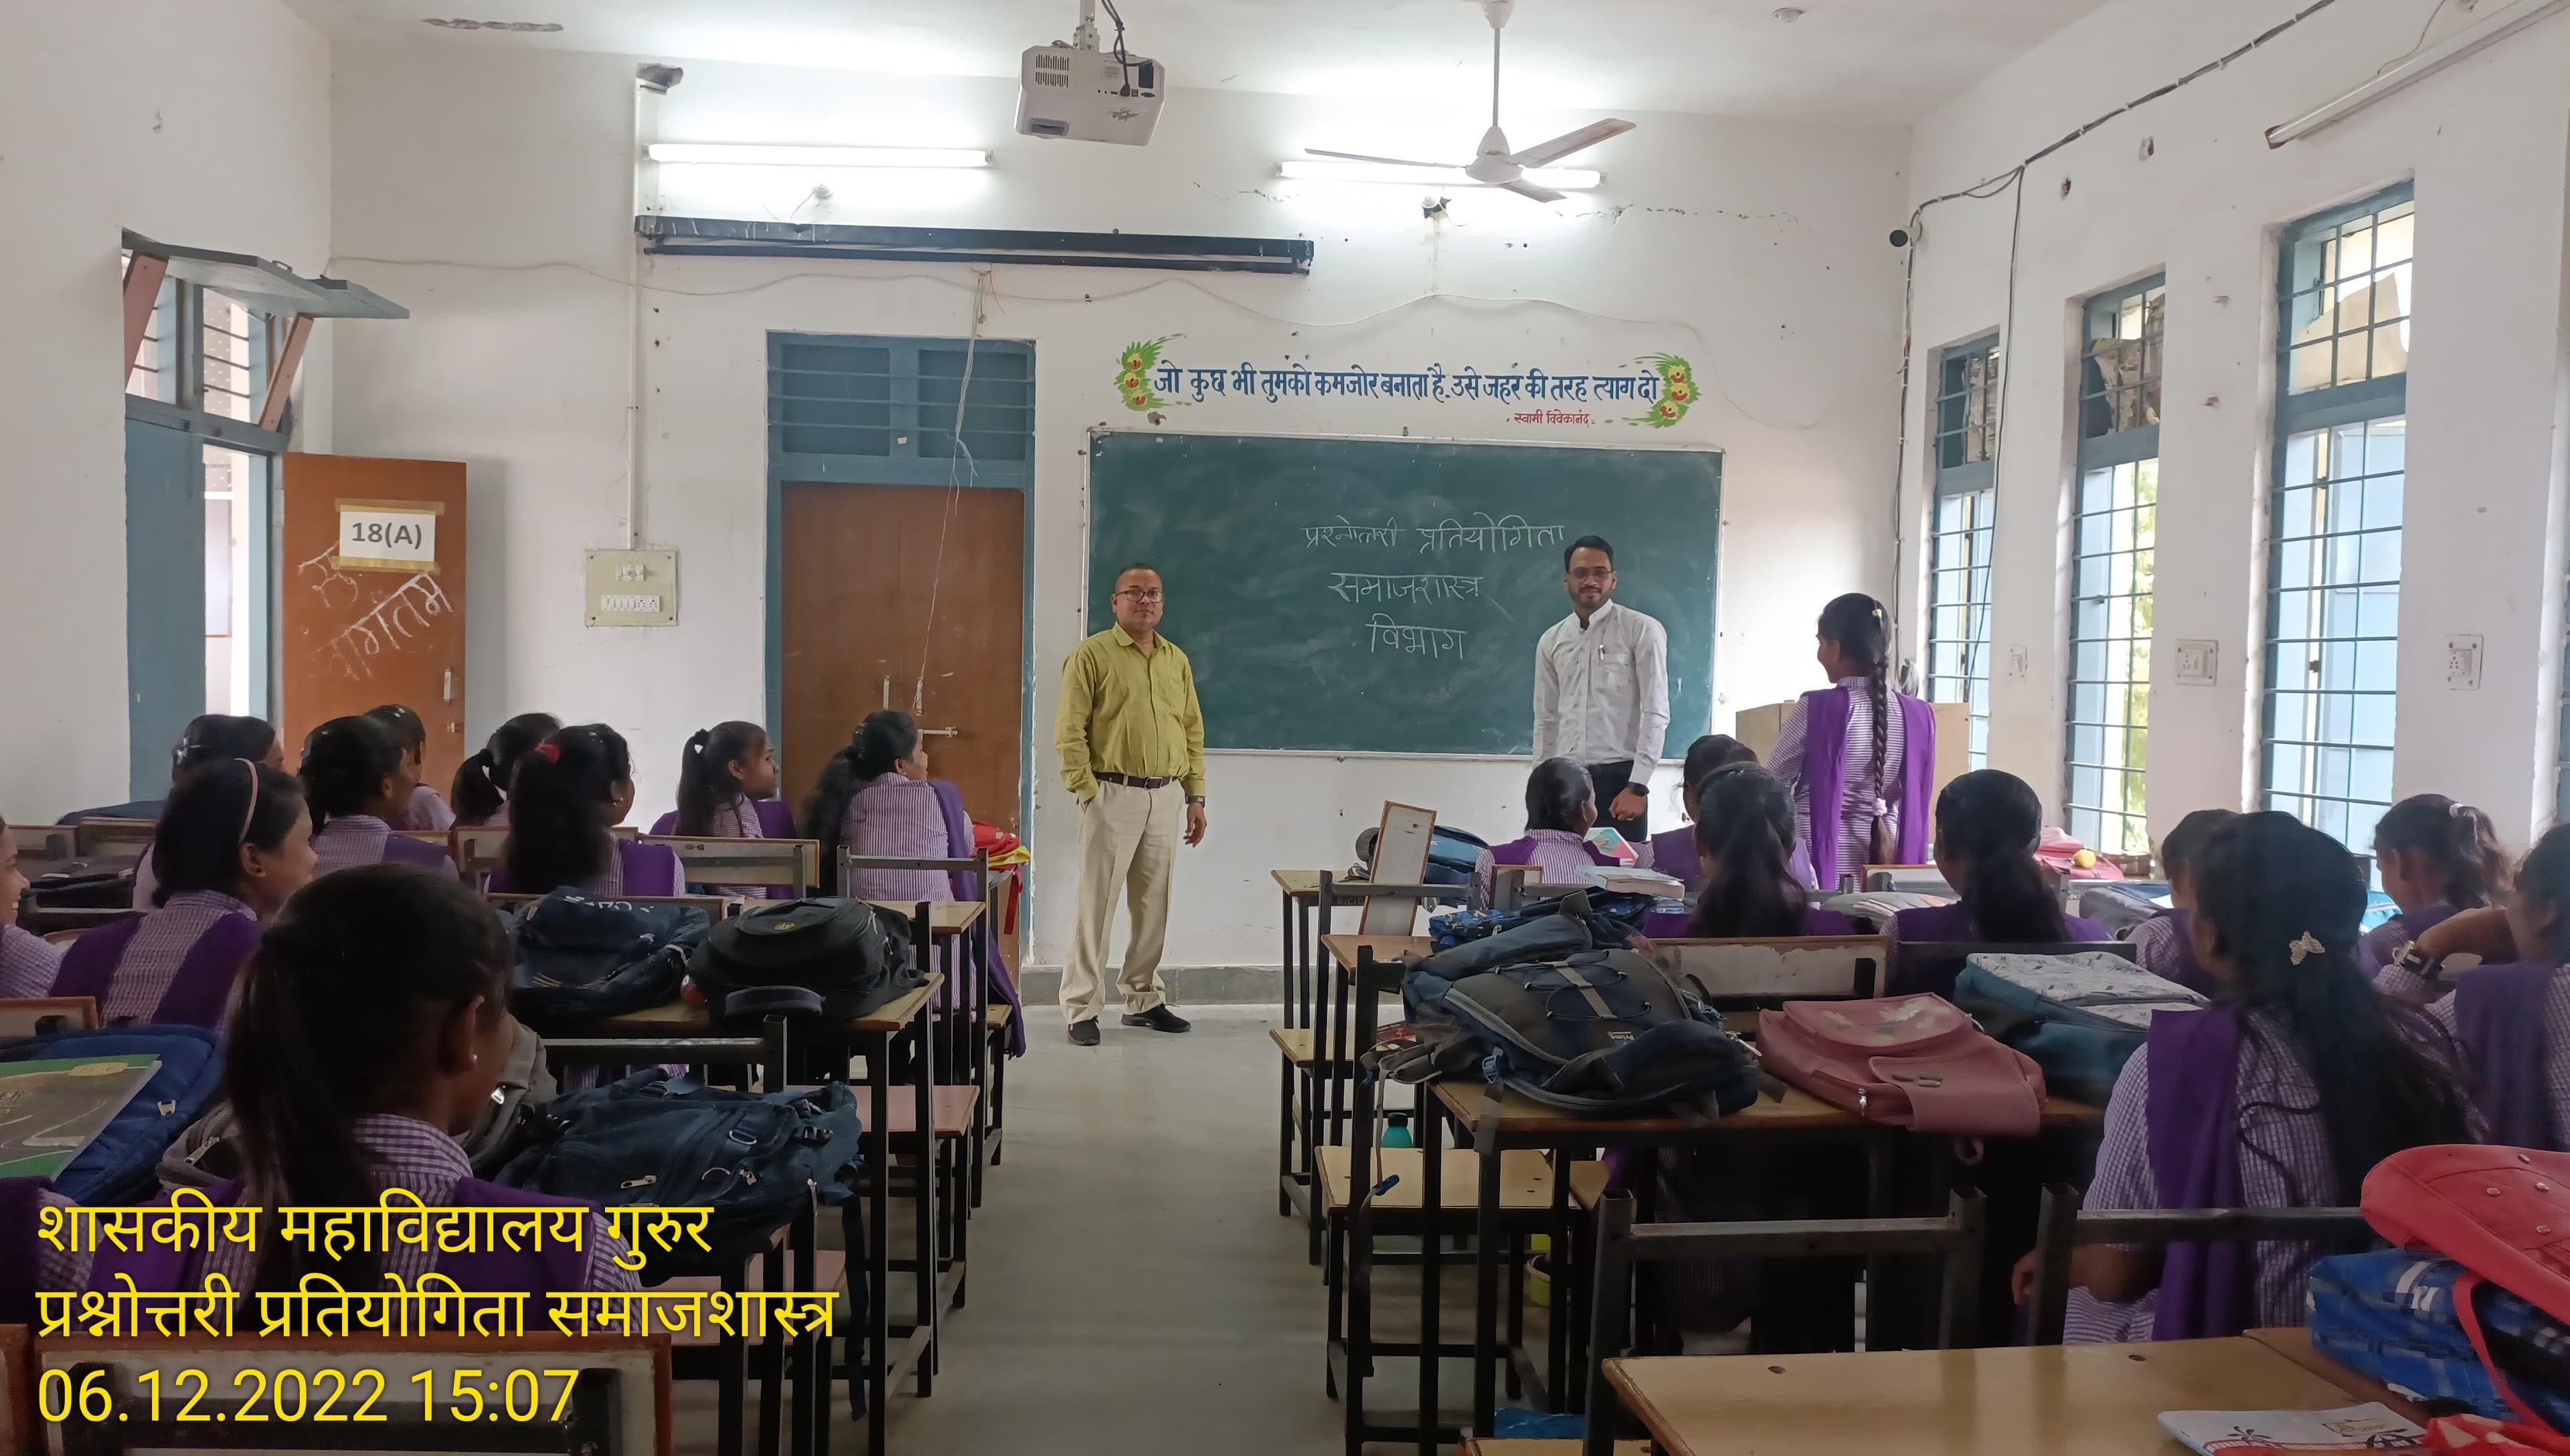 educational activities - Photo Govt. college Gurur